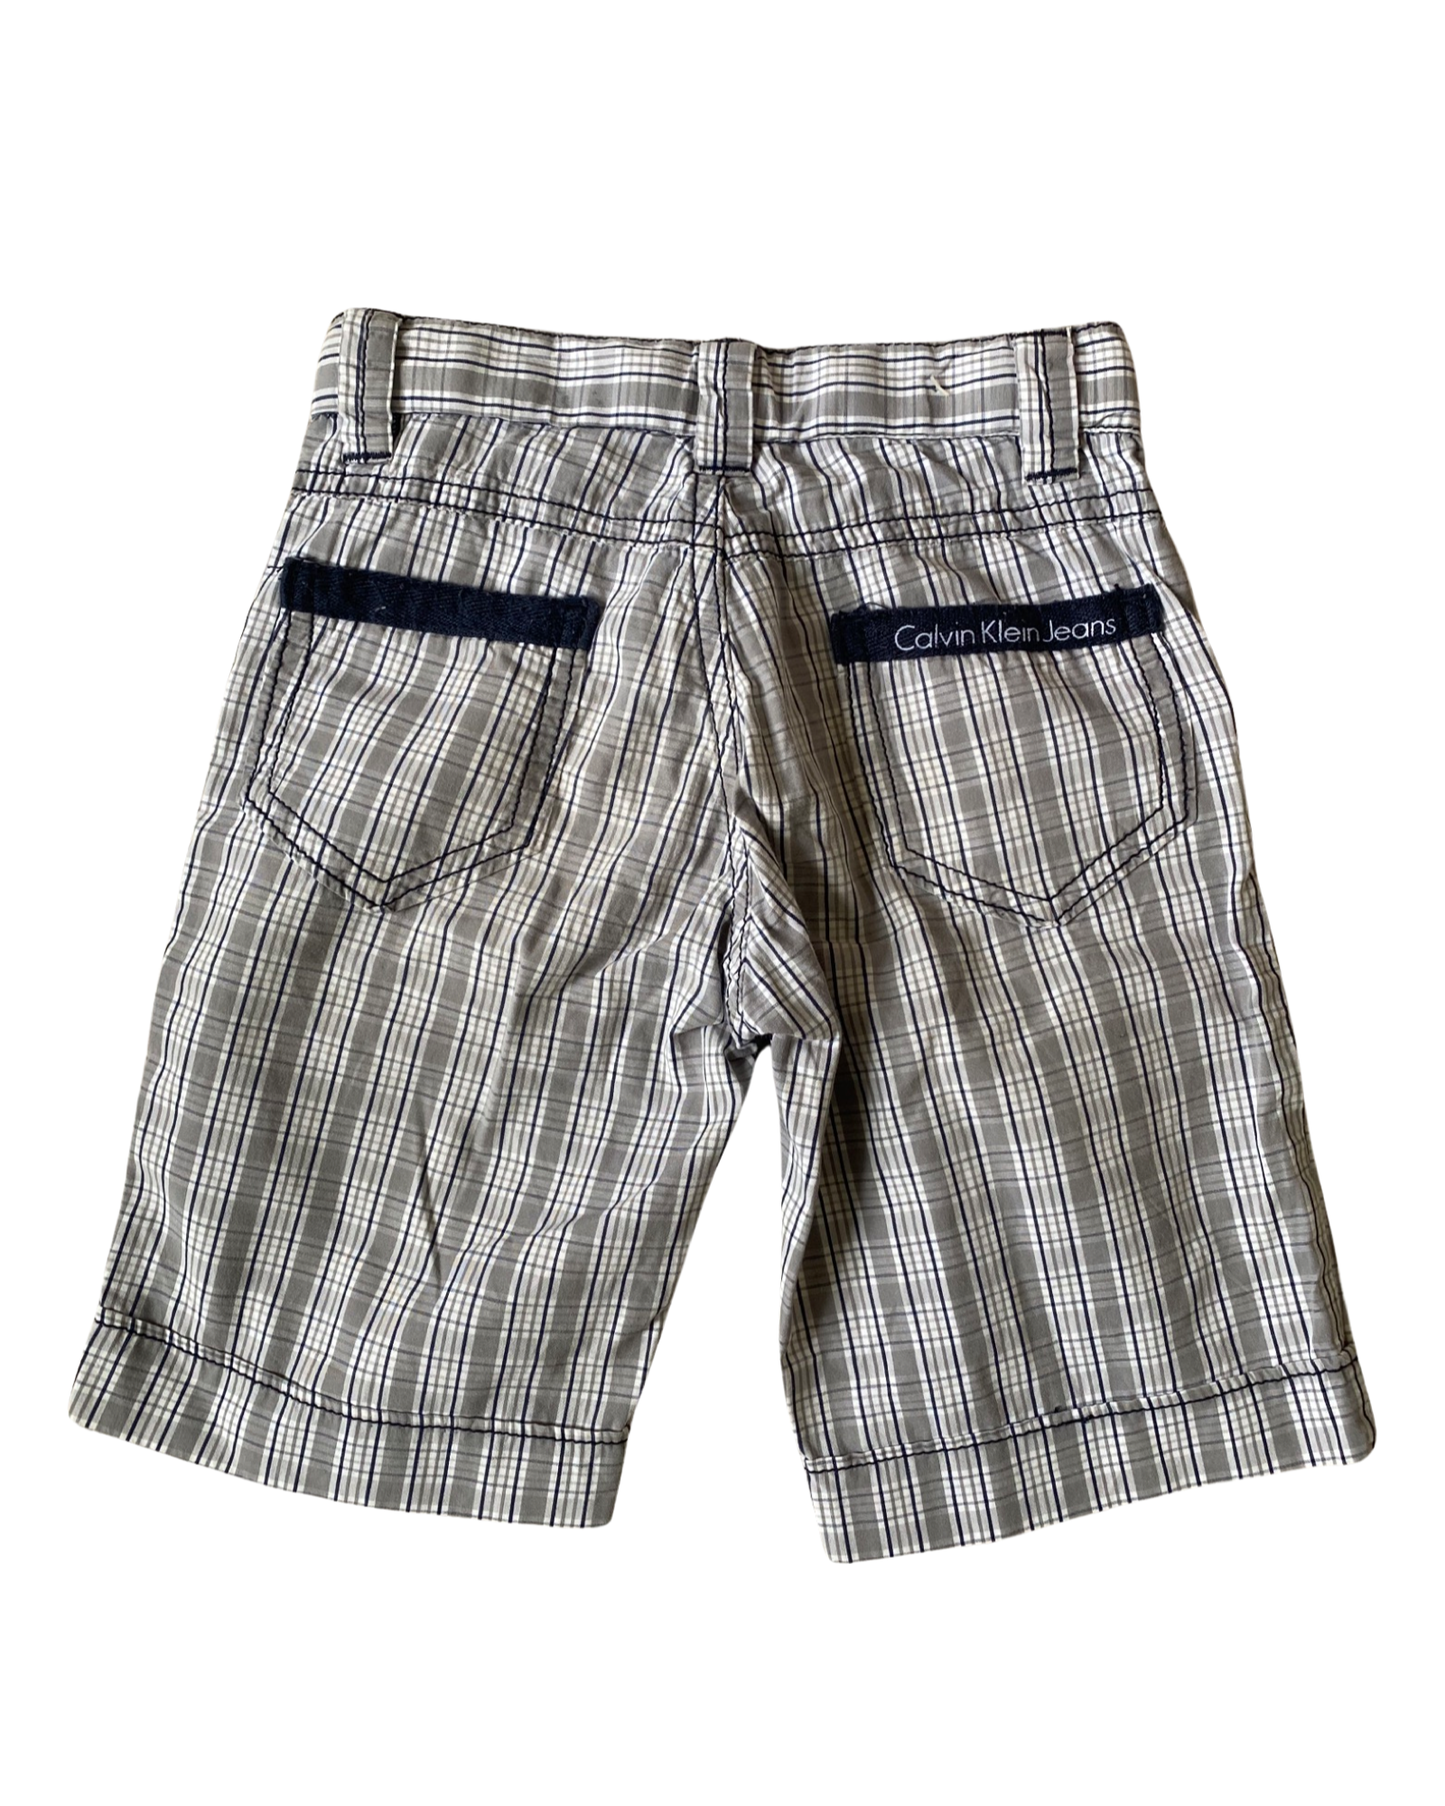 Calvin Klein vintage checked shorts (size 3-4yrs)